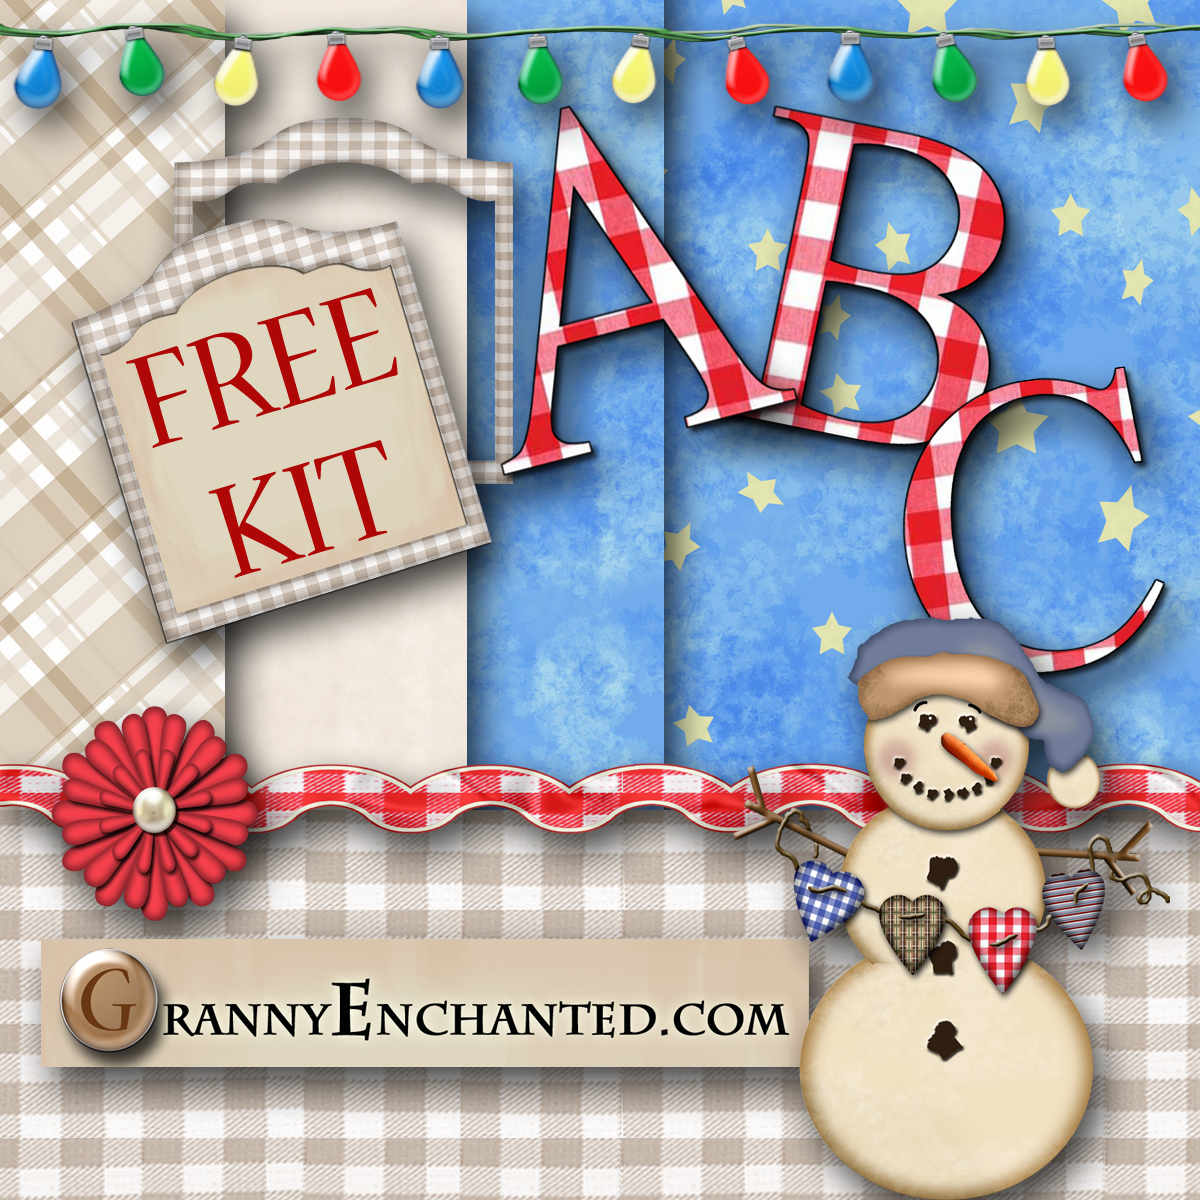 GRANNY ENCHANTED'S BLOG: Free Christmas Light Digi Scrapbook Kit